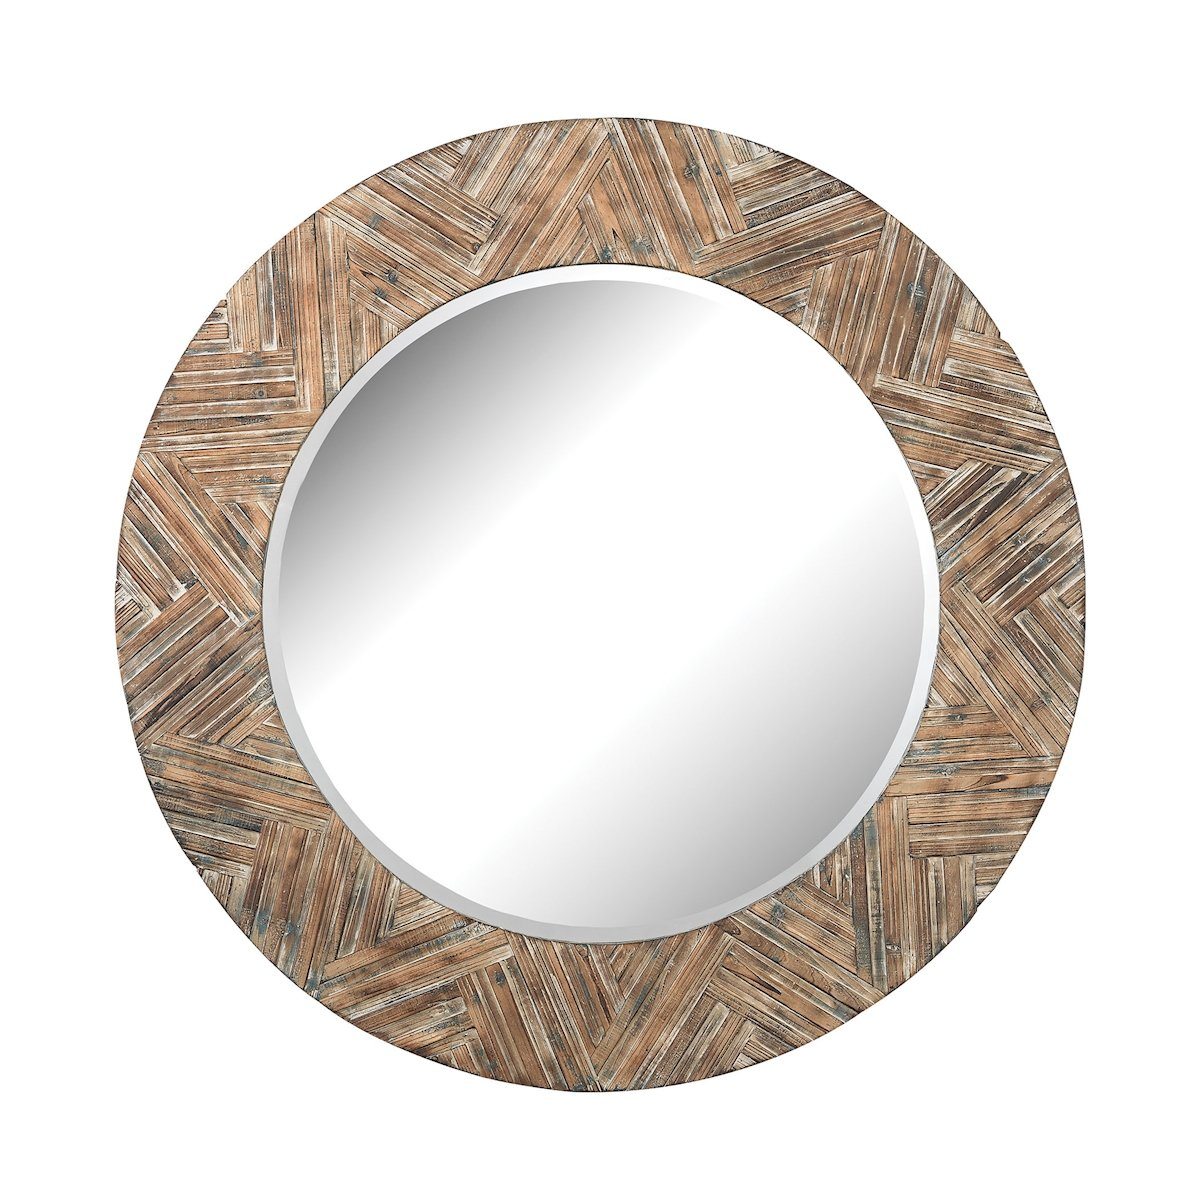 Large Round 48"w Wood Mirror Mirrors Dimond Home 